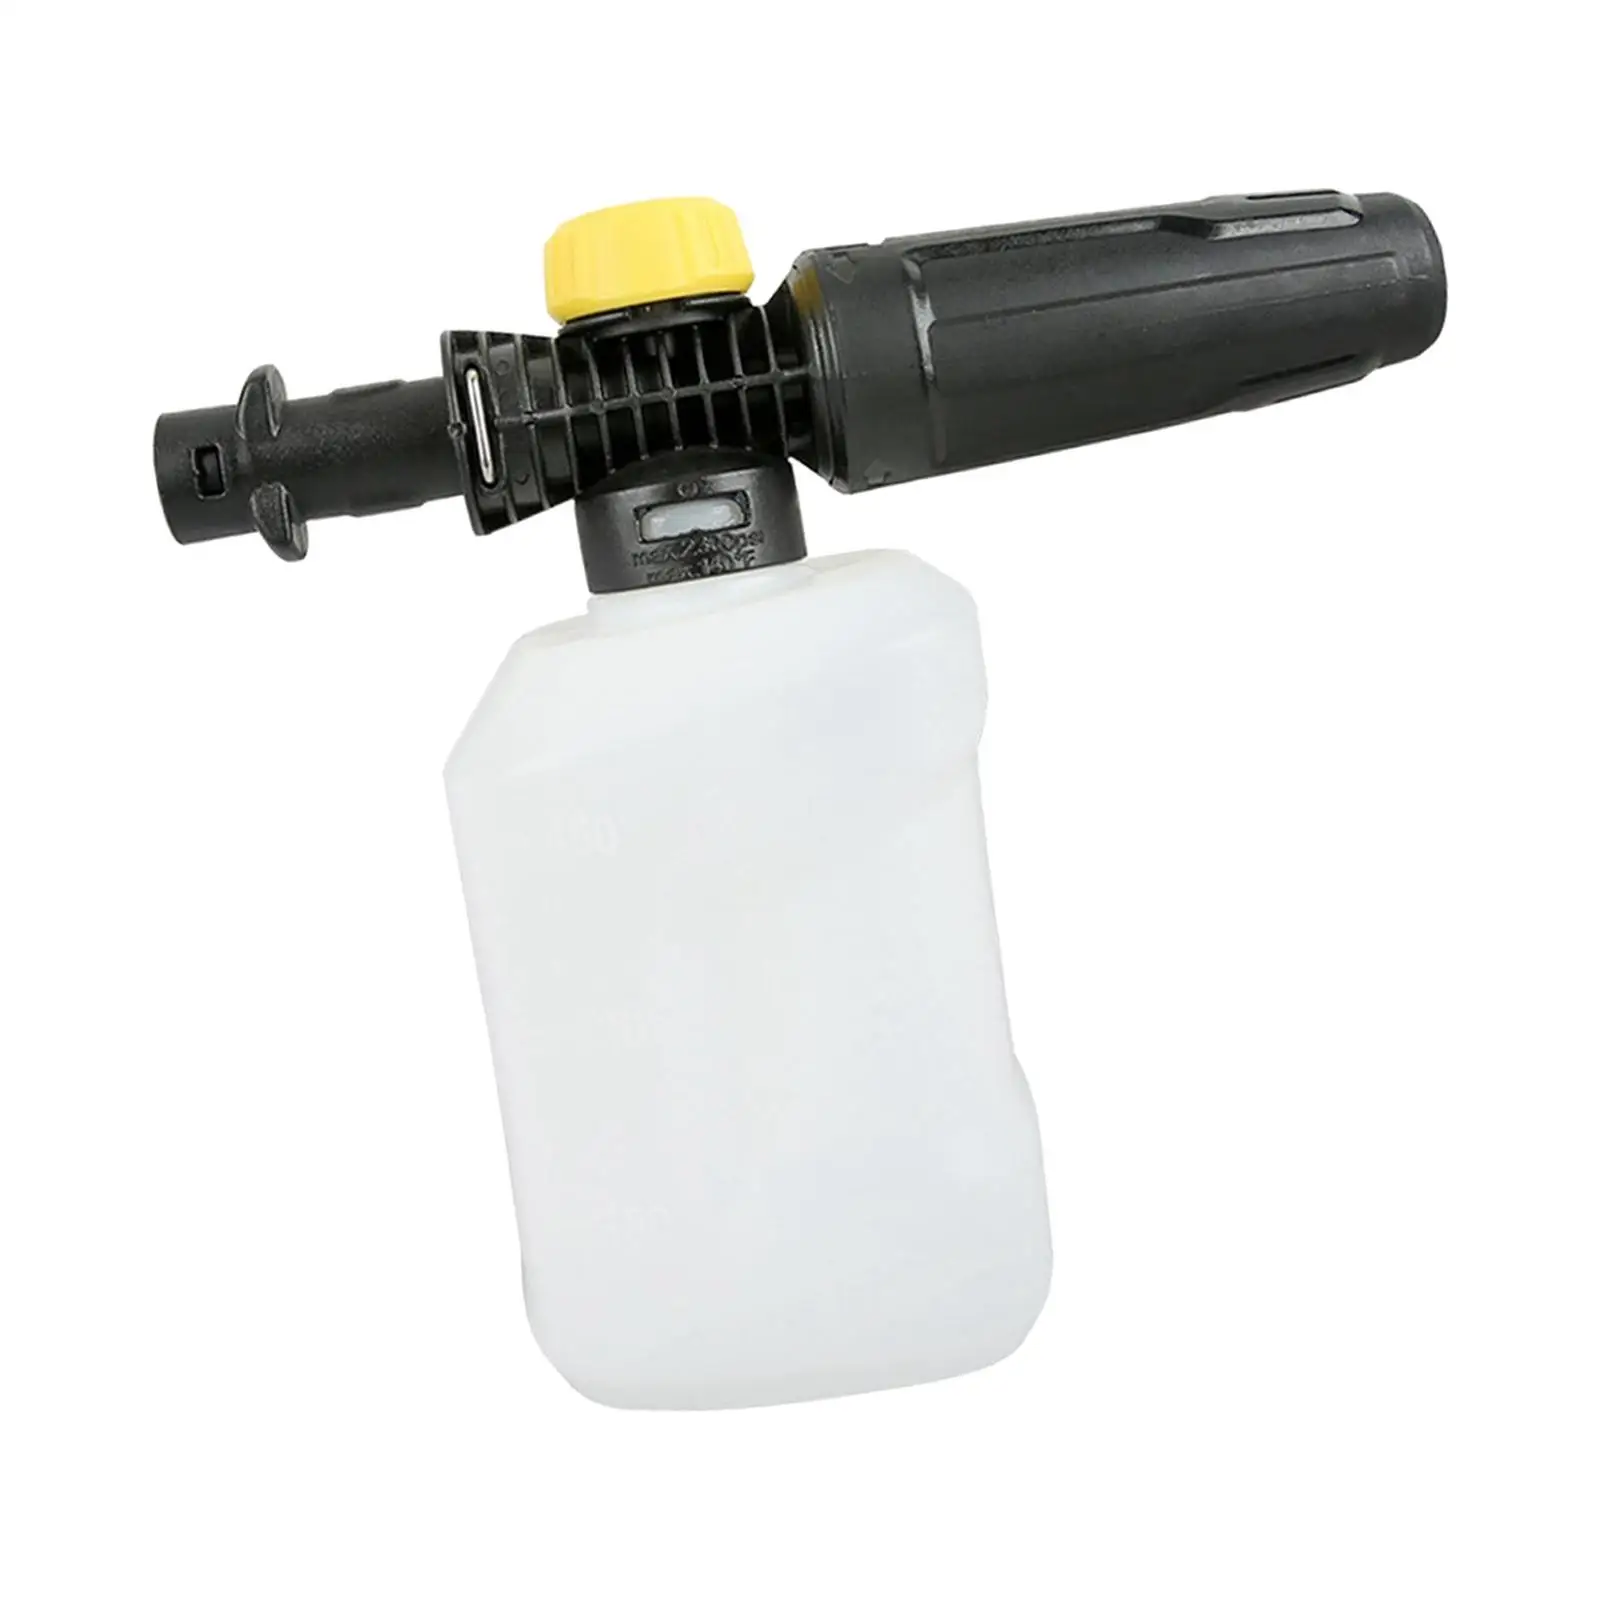 Portable Foaming Sprayer Water Sprayer Foam Watering Can Car Wash Sprayer for Flowers Watering Car Cleaning Patio Garden Lawn